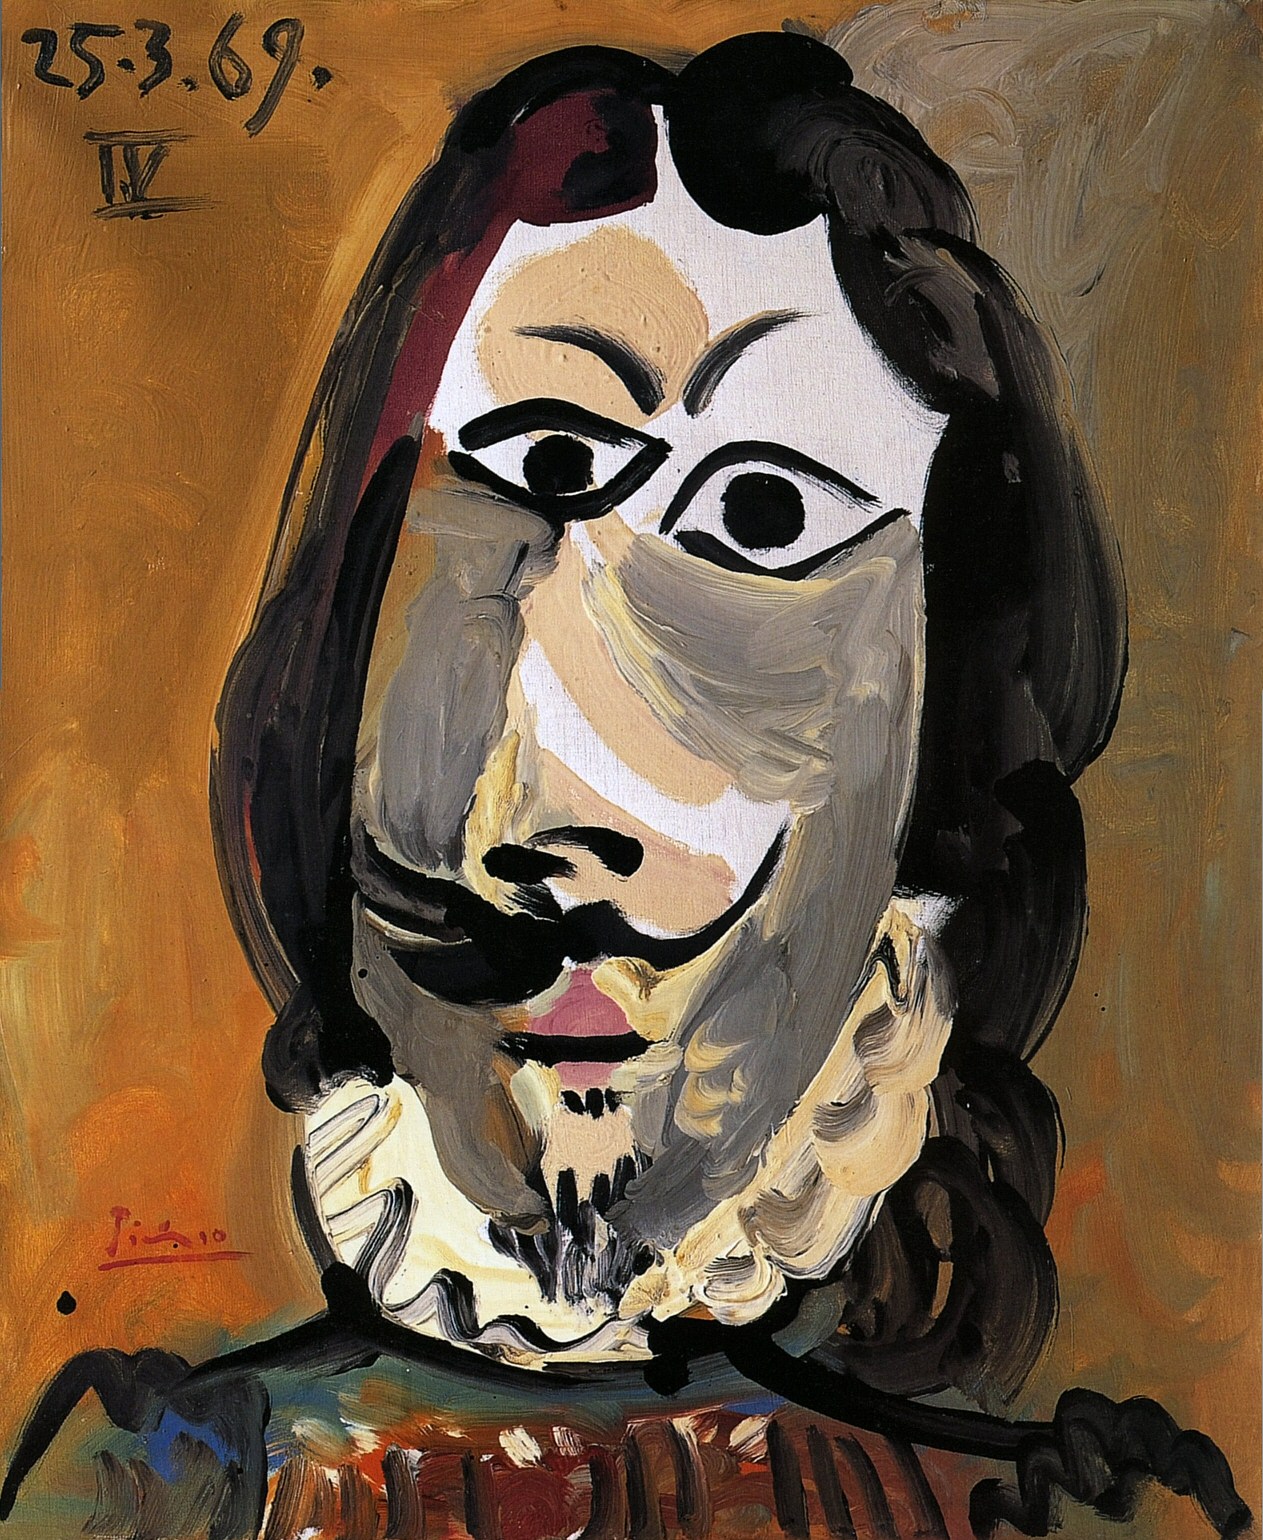 Пабло Пикассо. "Голова мужчины". 25.03.1969.